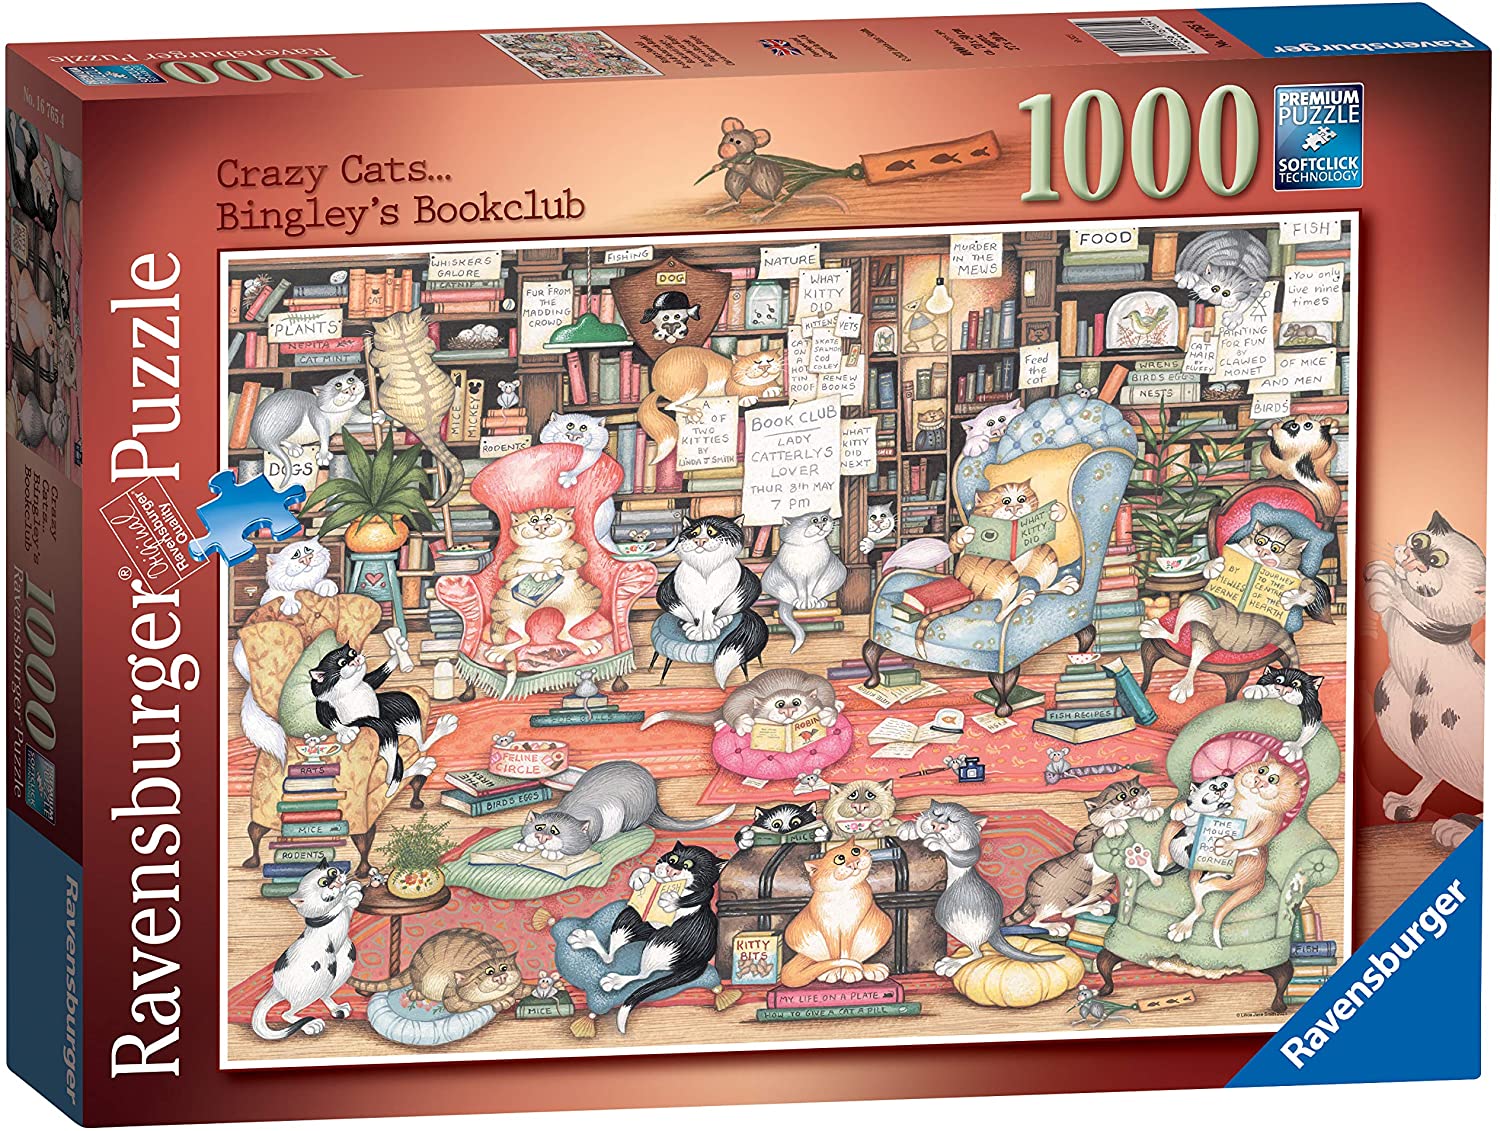 Ravensburger Crazy Cats Bookclub 1000 Piece Jigsaw